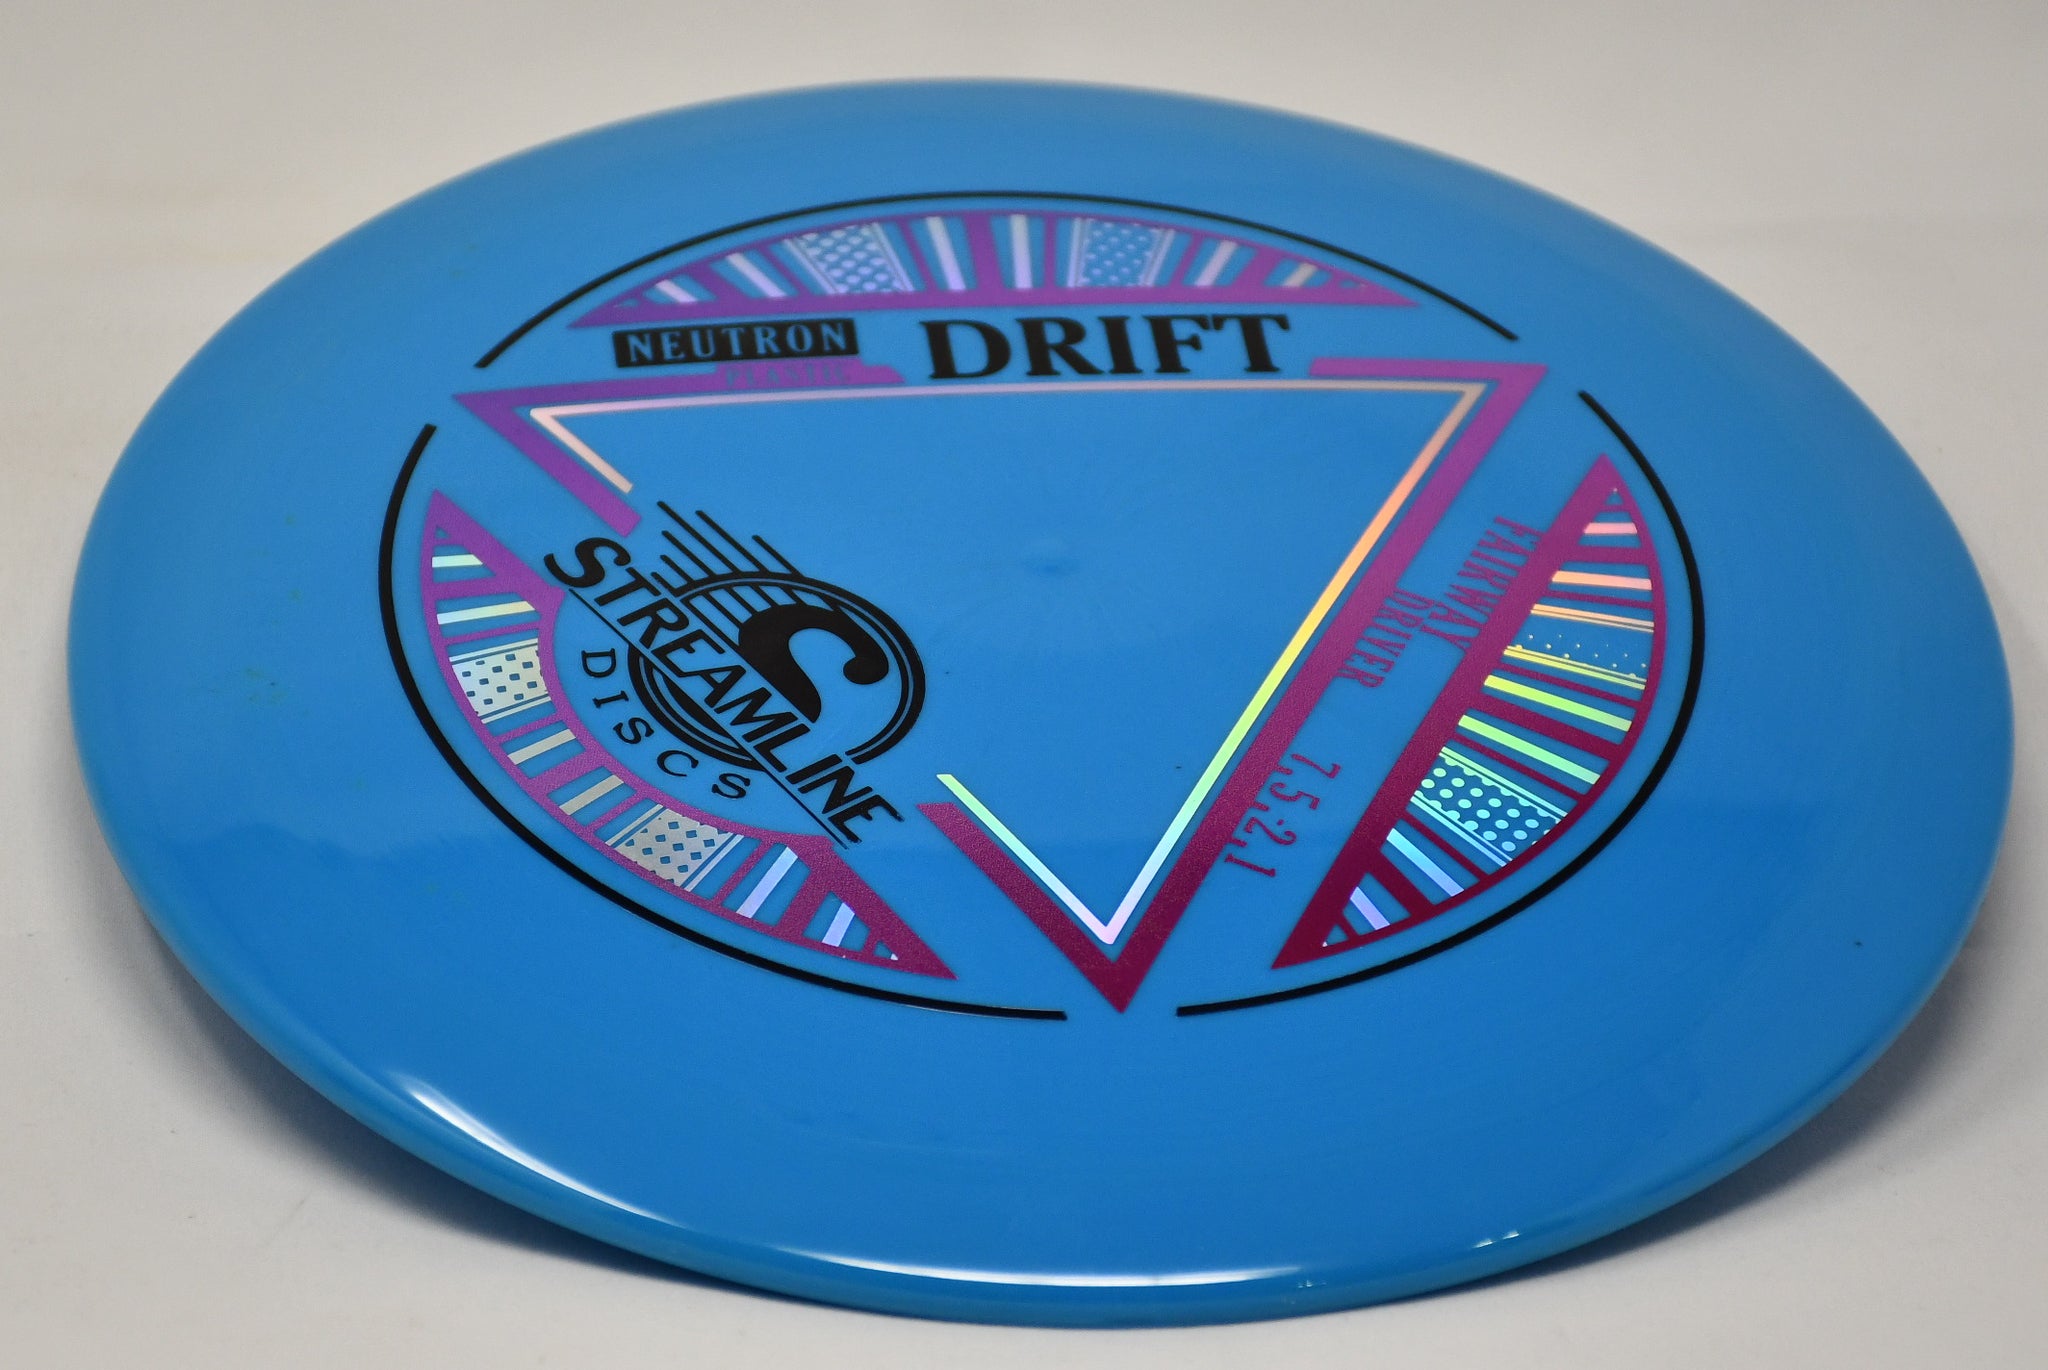 Streamline Neutron Drift Fairway Driver Disc Golf Disc